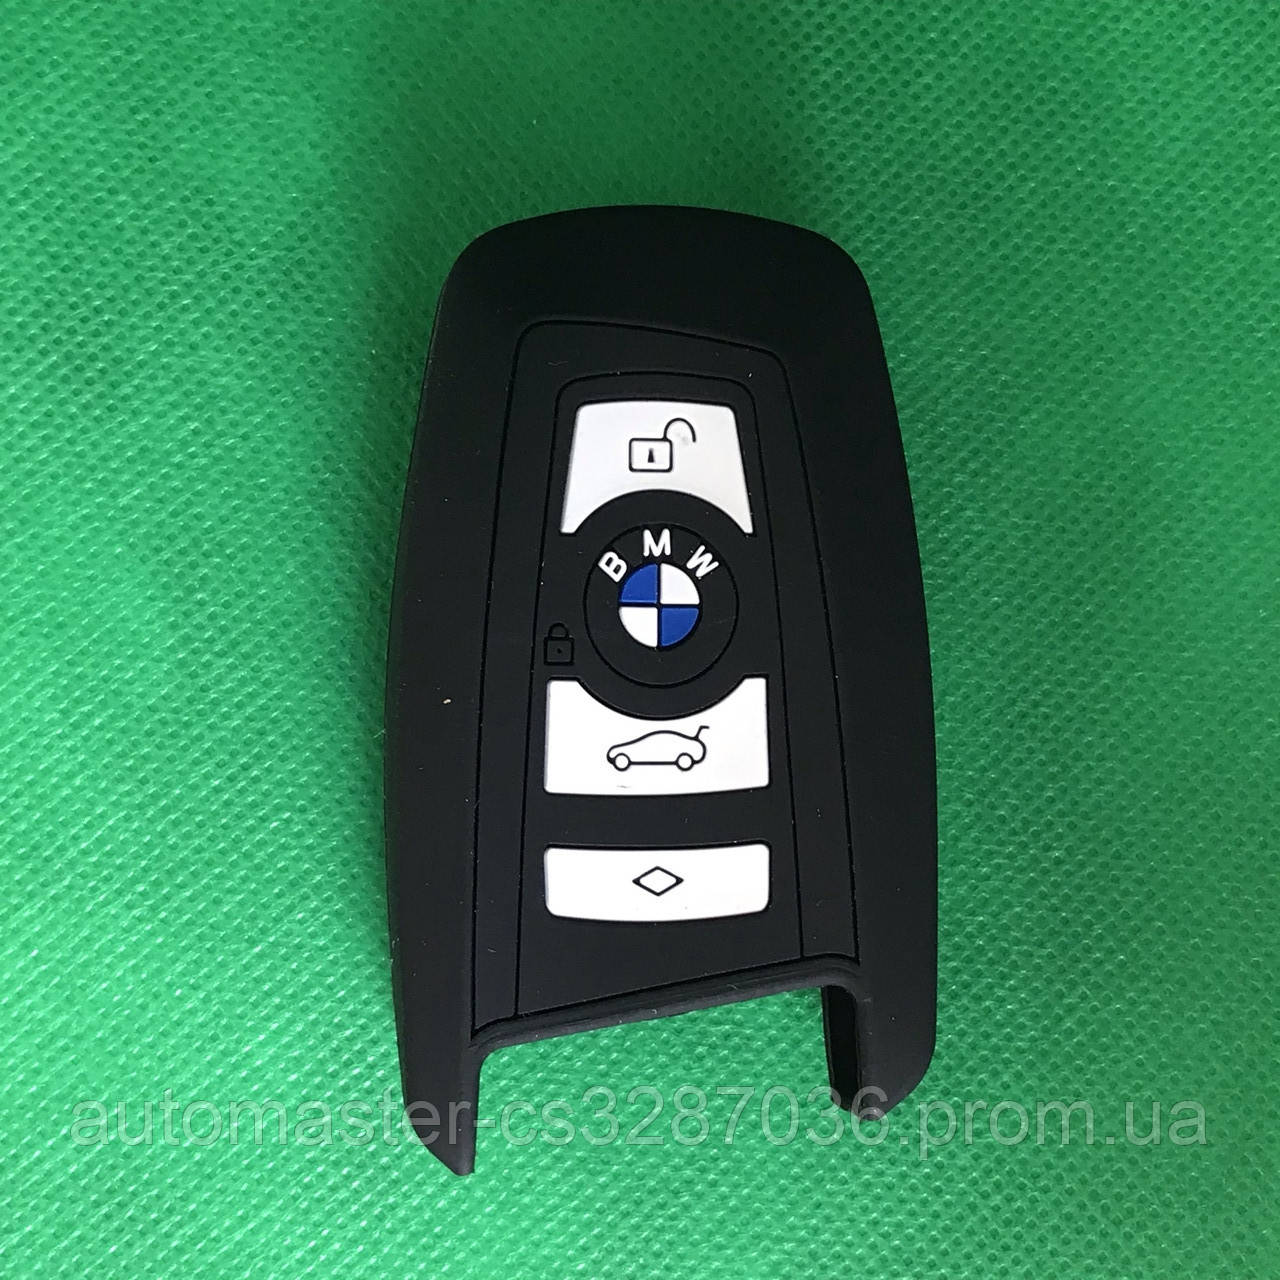 Чехол силиконовый для СМАРТ ключа 4 Кнопки БМВ BMW 3 5 7 СЕРИИ X3 X5